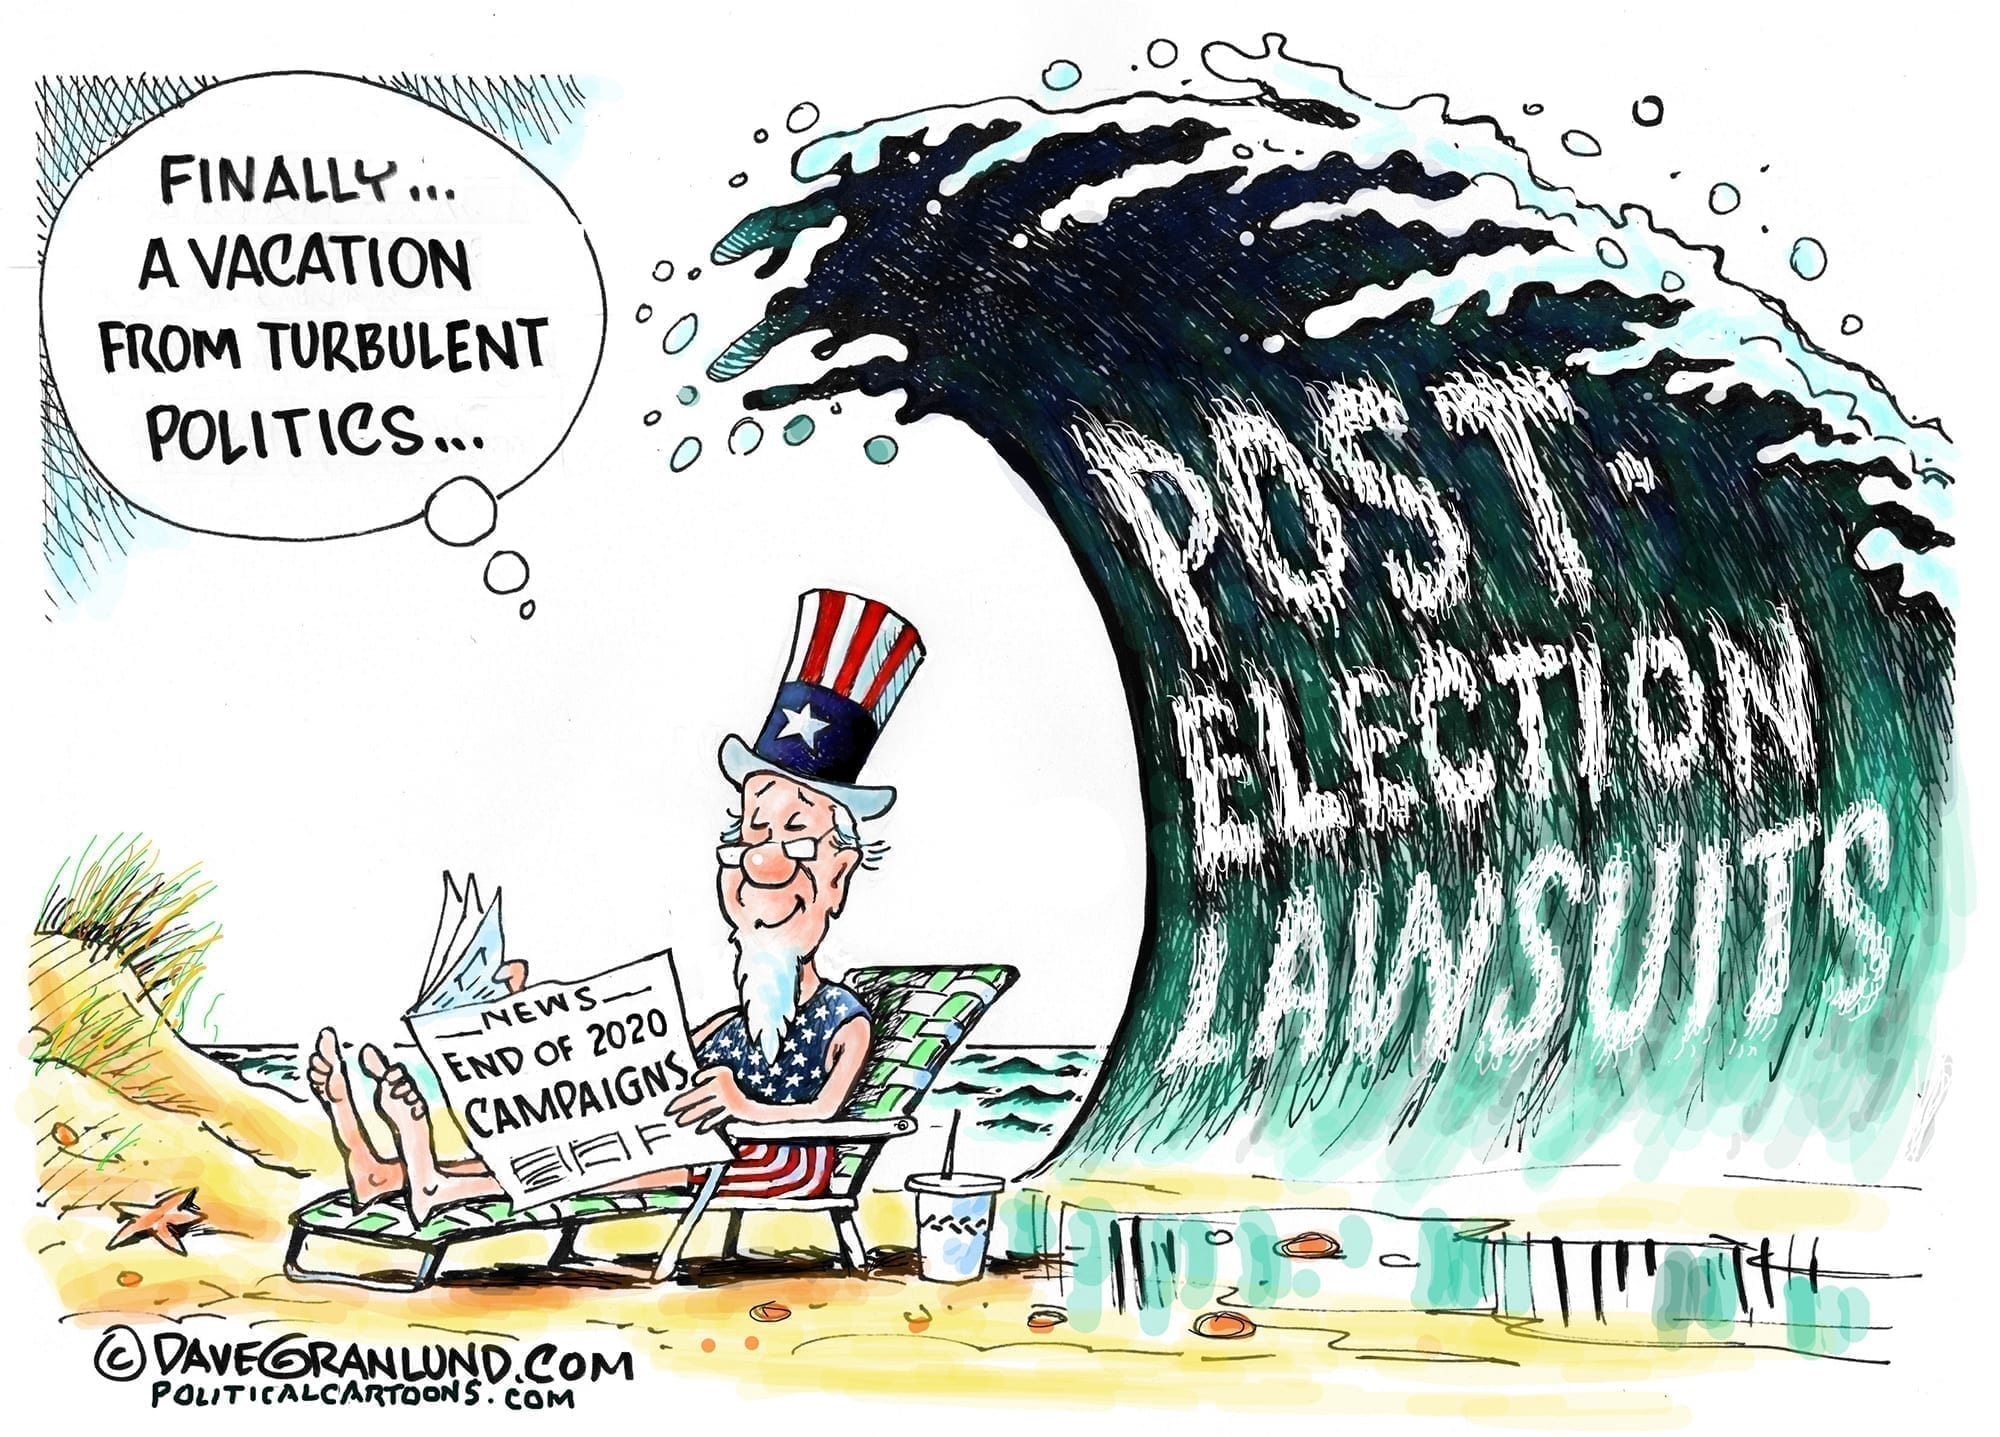 Election lawsuits